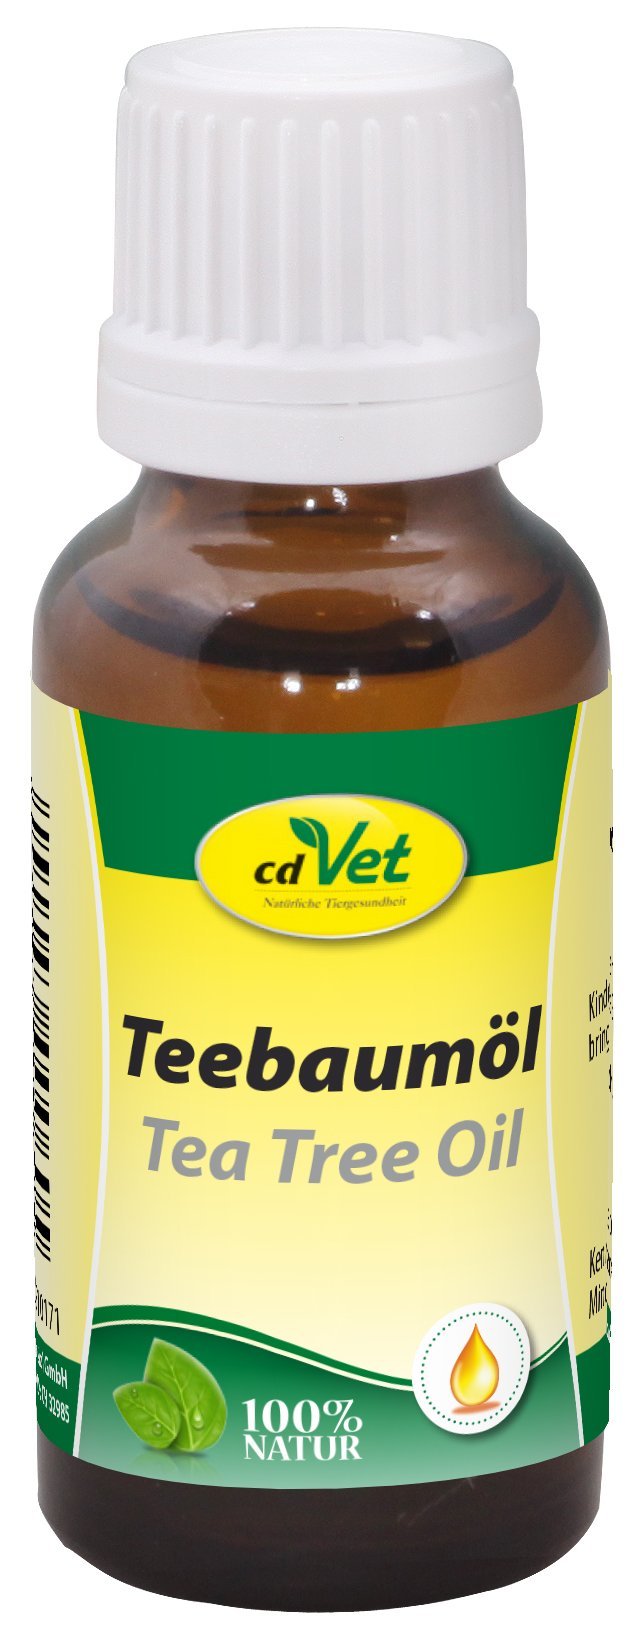 cdVet Naturprodukte Teebaumöl 20 ml - Animal - special product - versatile - high quality - gentle - natural + pure - well-being - water bath distillation process - compatible - - PawsPlanet Australia